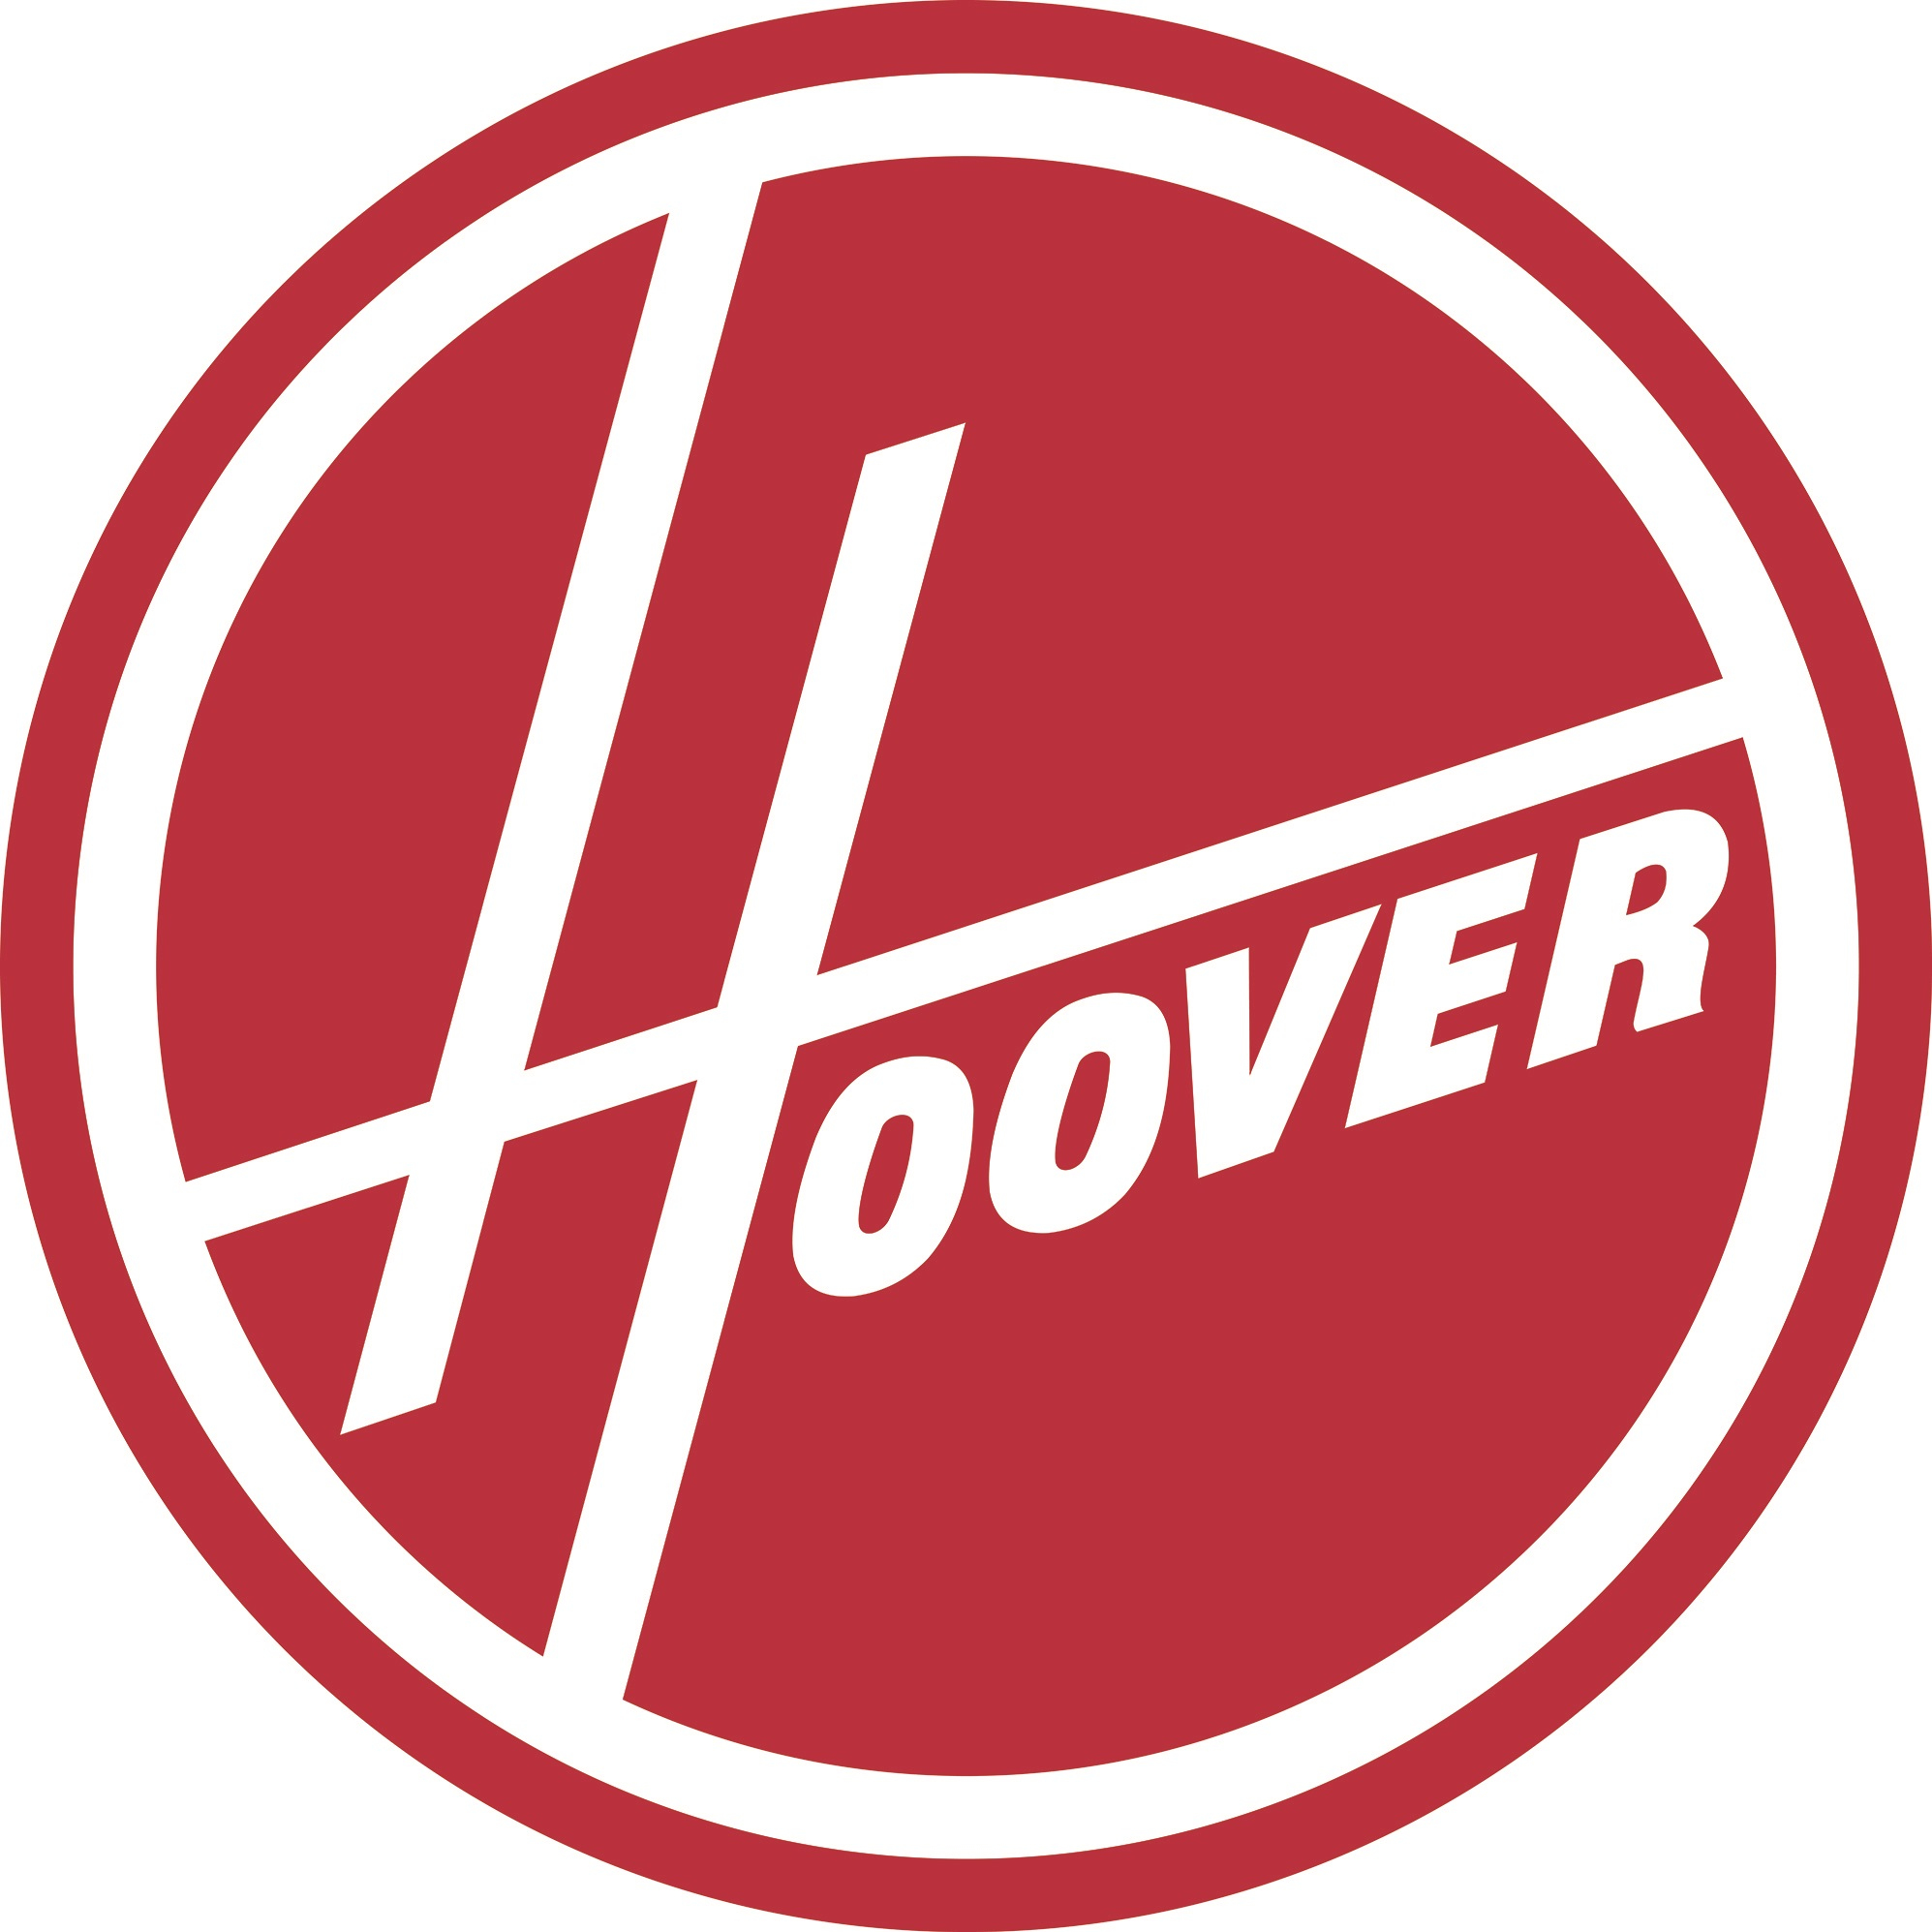 Hoover 39101039 vacuum